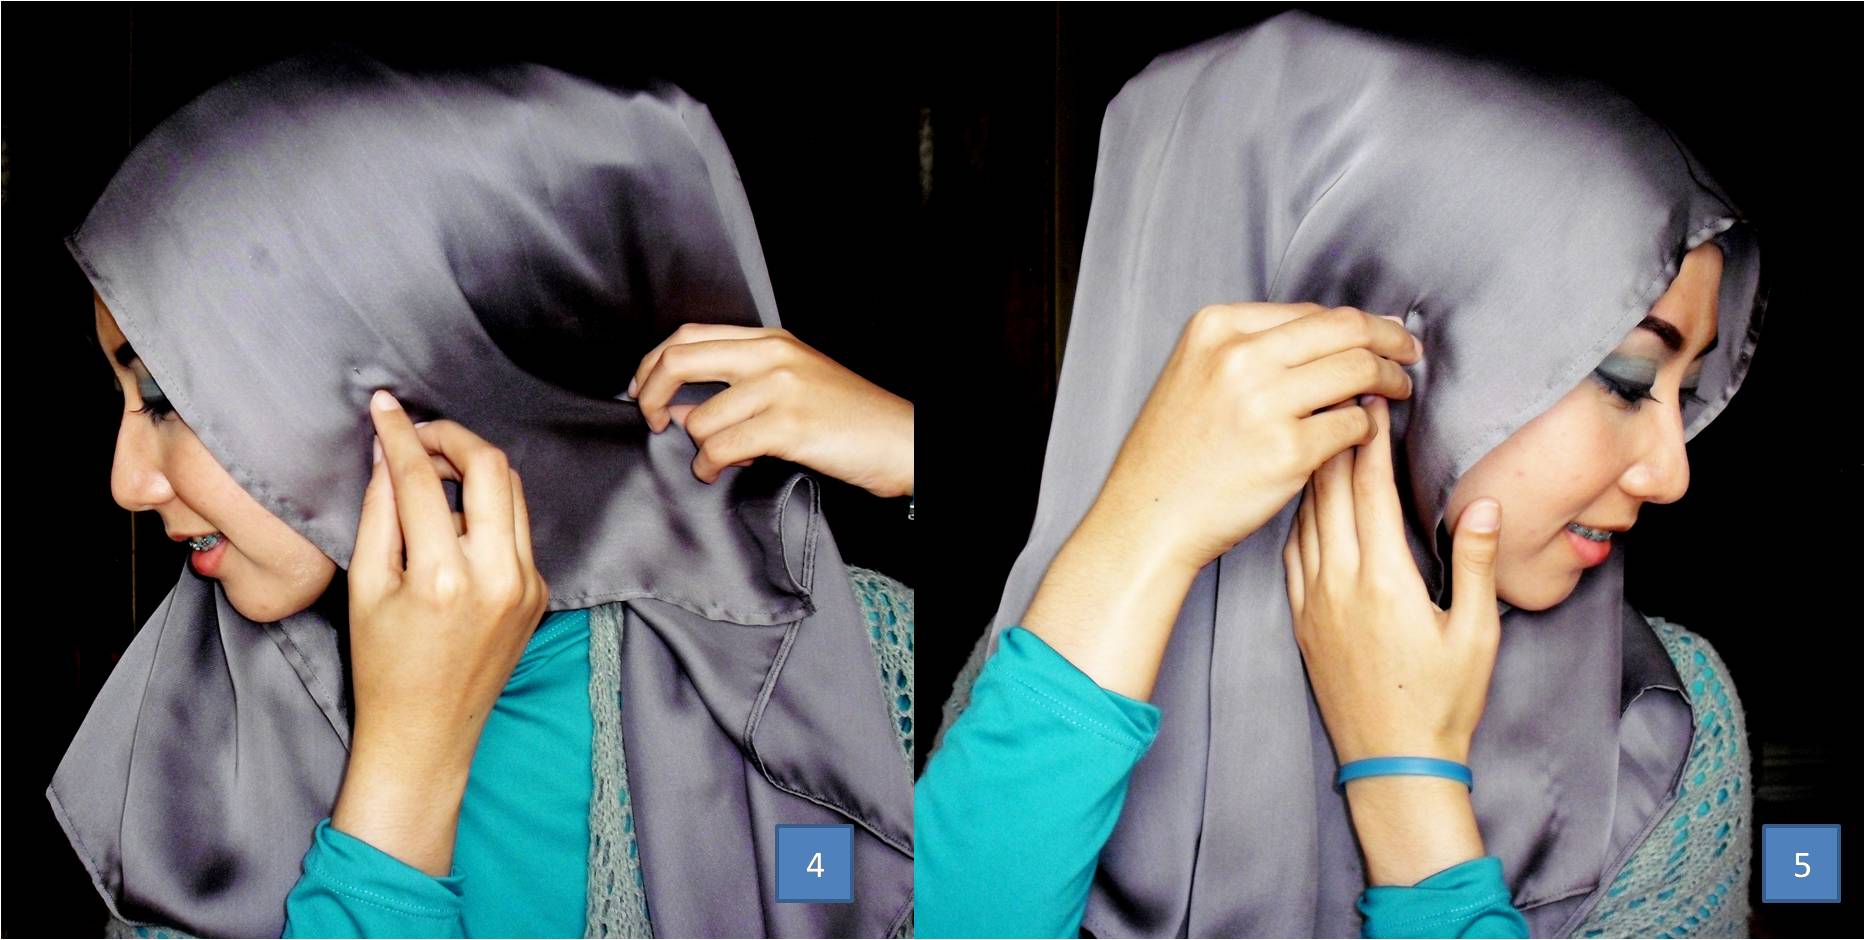 Tutorial Jilbab Segi Empat Hana Tajima Tutorial Hijab Paling